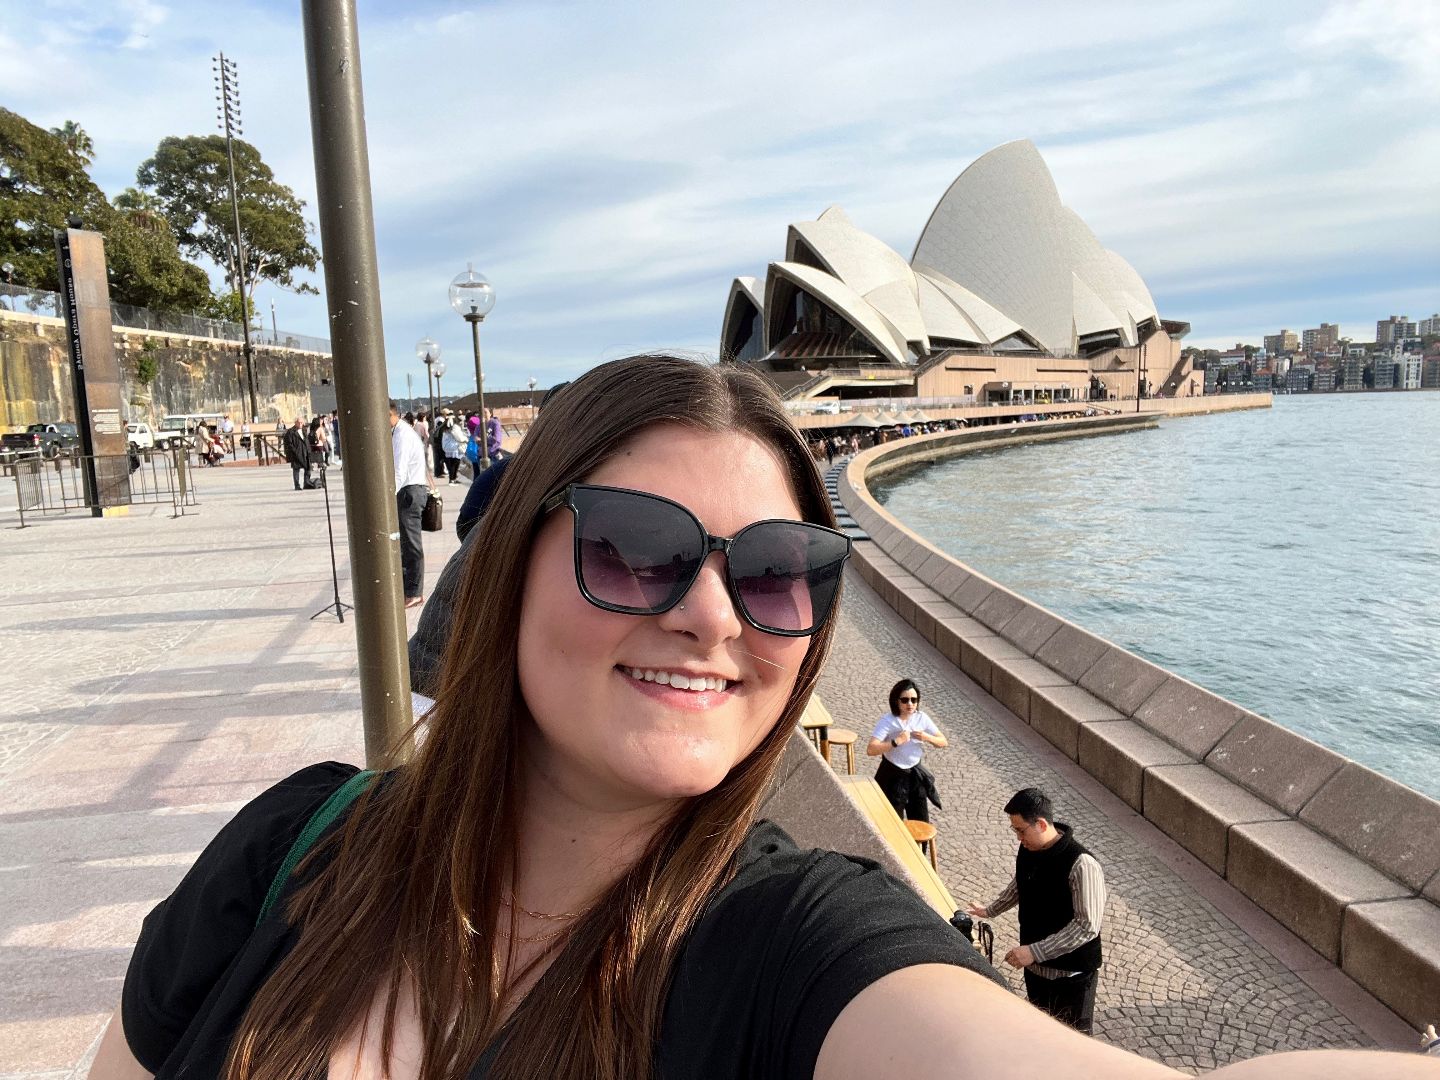 Alyssa taking a selfie by the Opera House